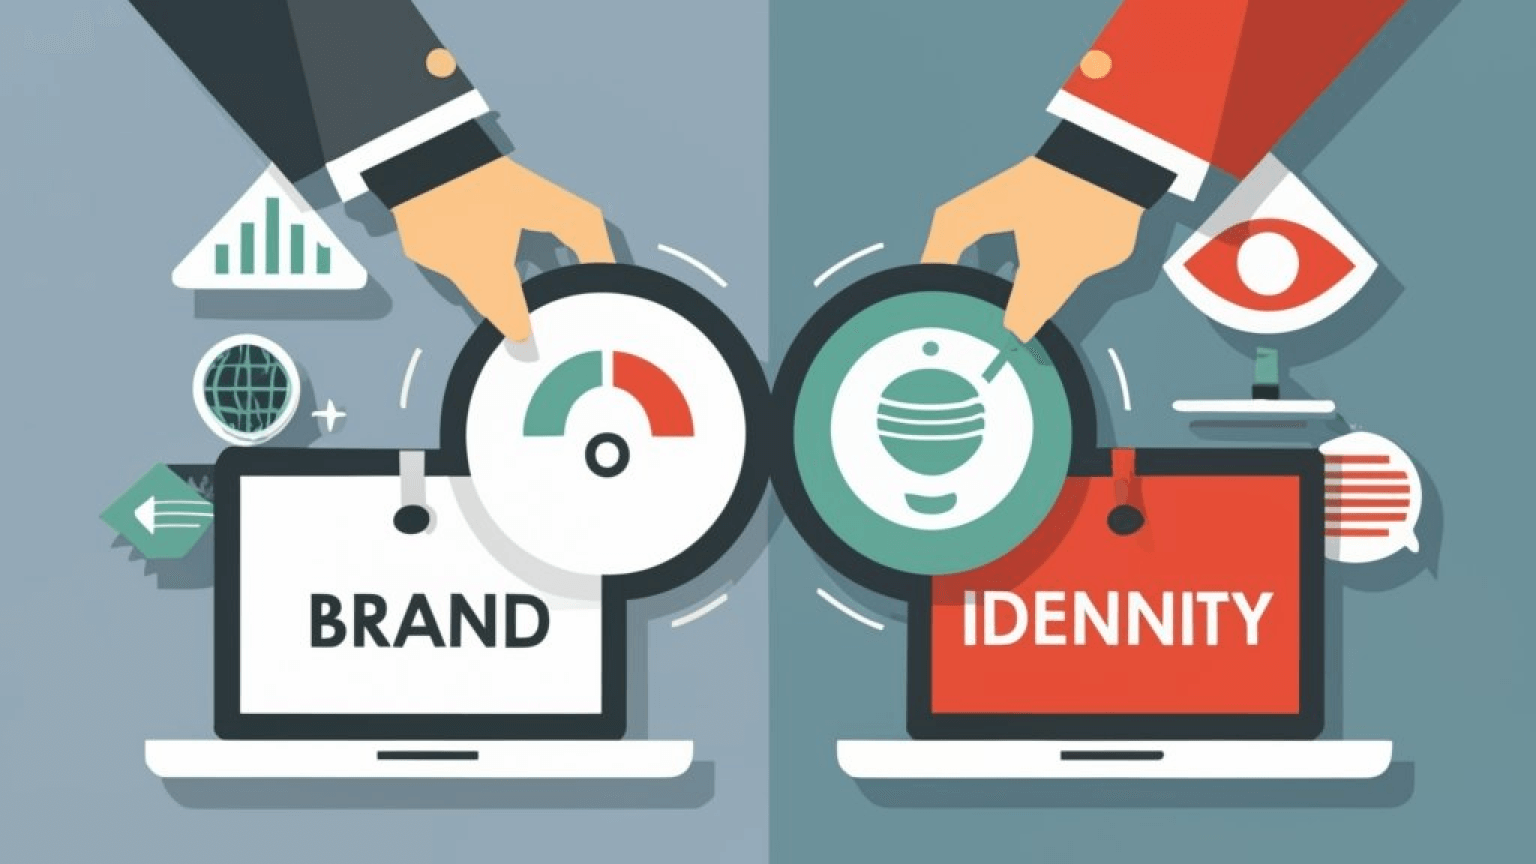 Brand Image vs Brand Identity: key differences